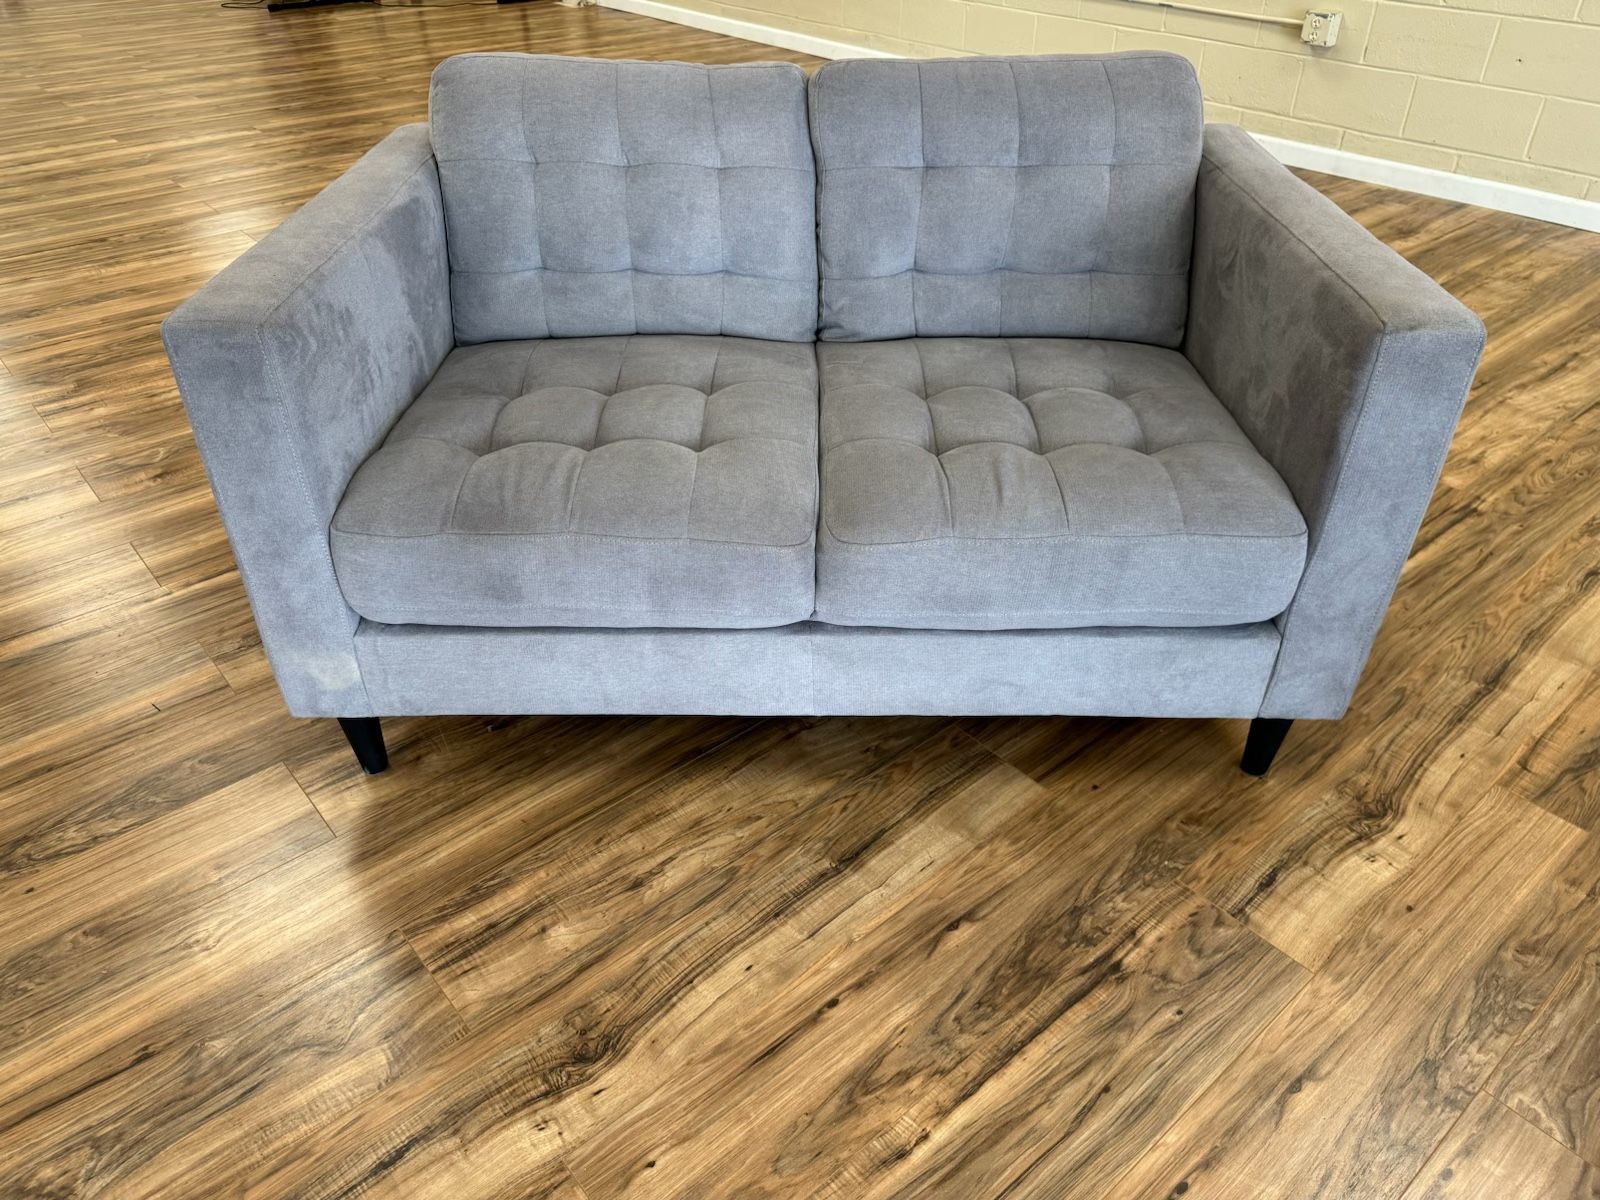 Sofa Set Must Sell